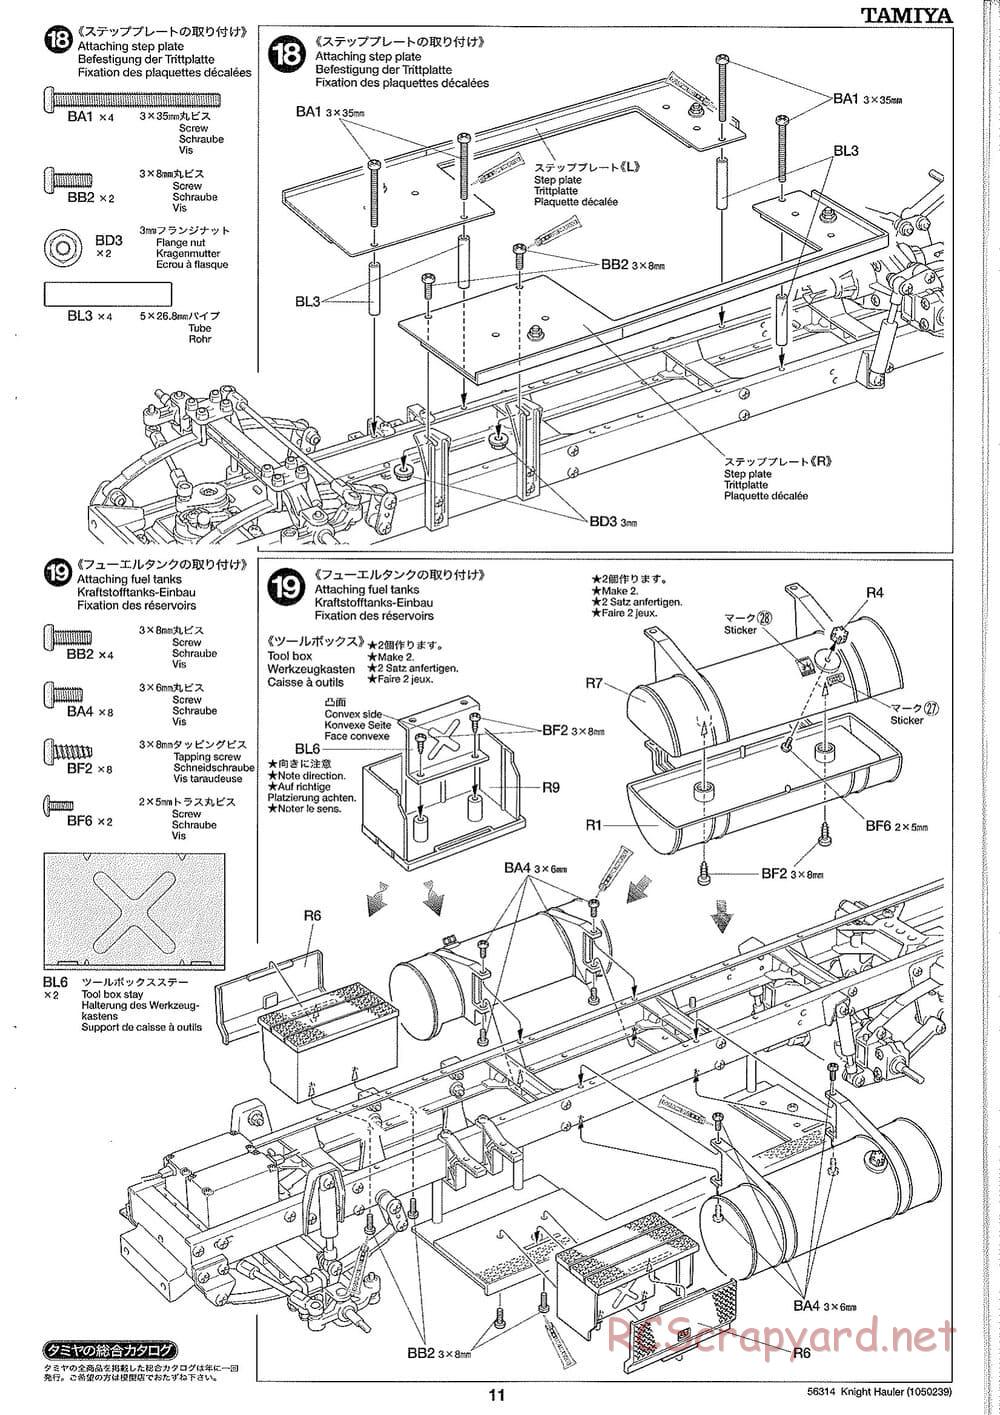 Tamiya - Knight Hauler Tractor Truck Chassis - Manual - Page 11